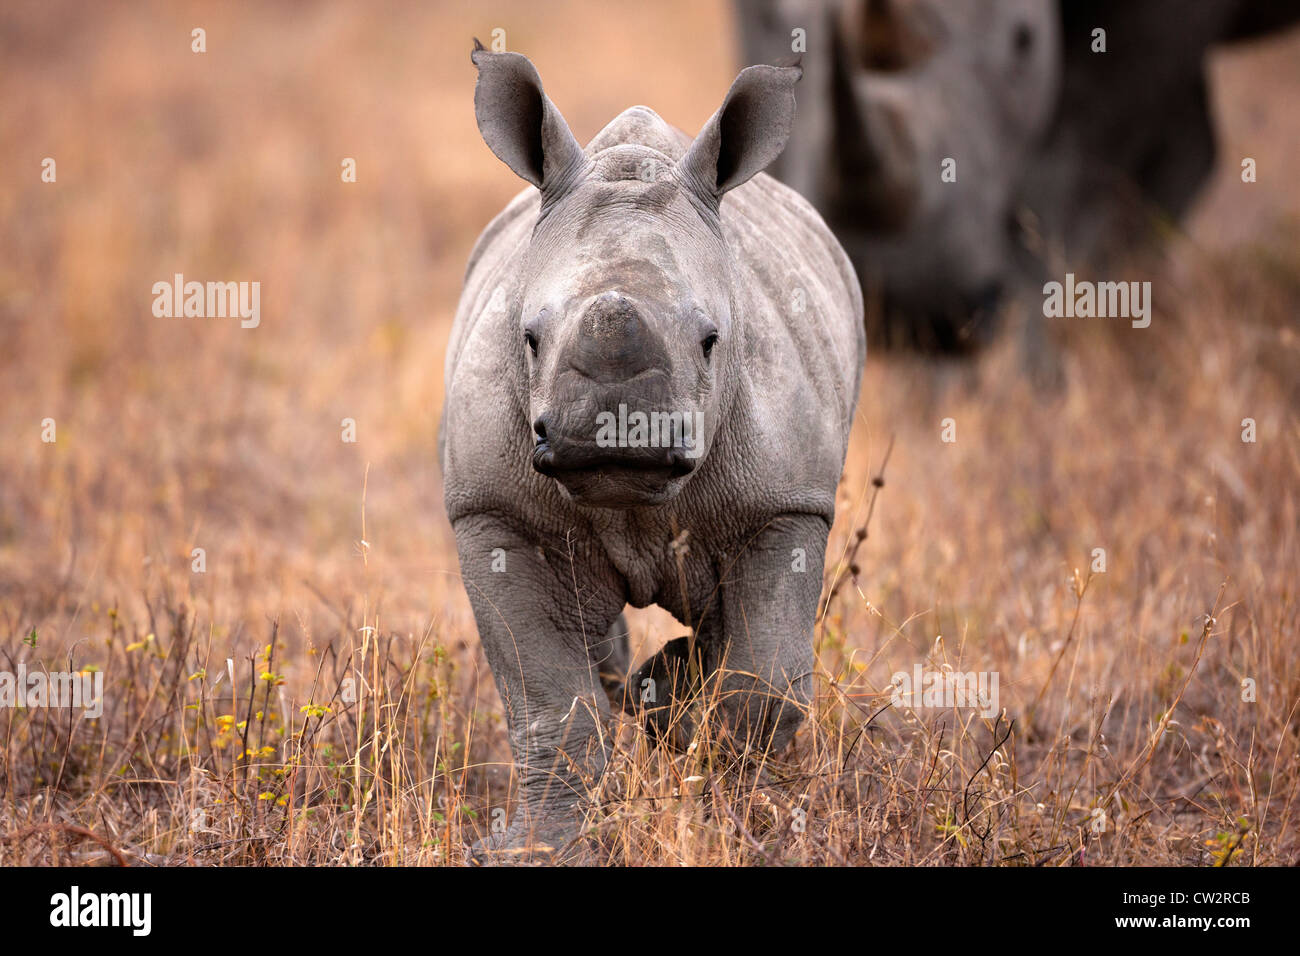 Vista frontale del baby rinoceronte camminando con la madre Foto Stock